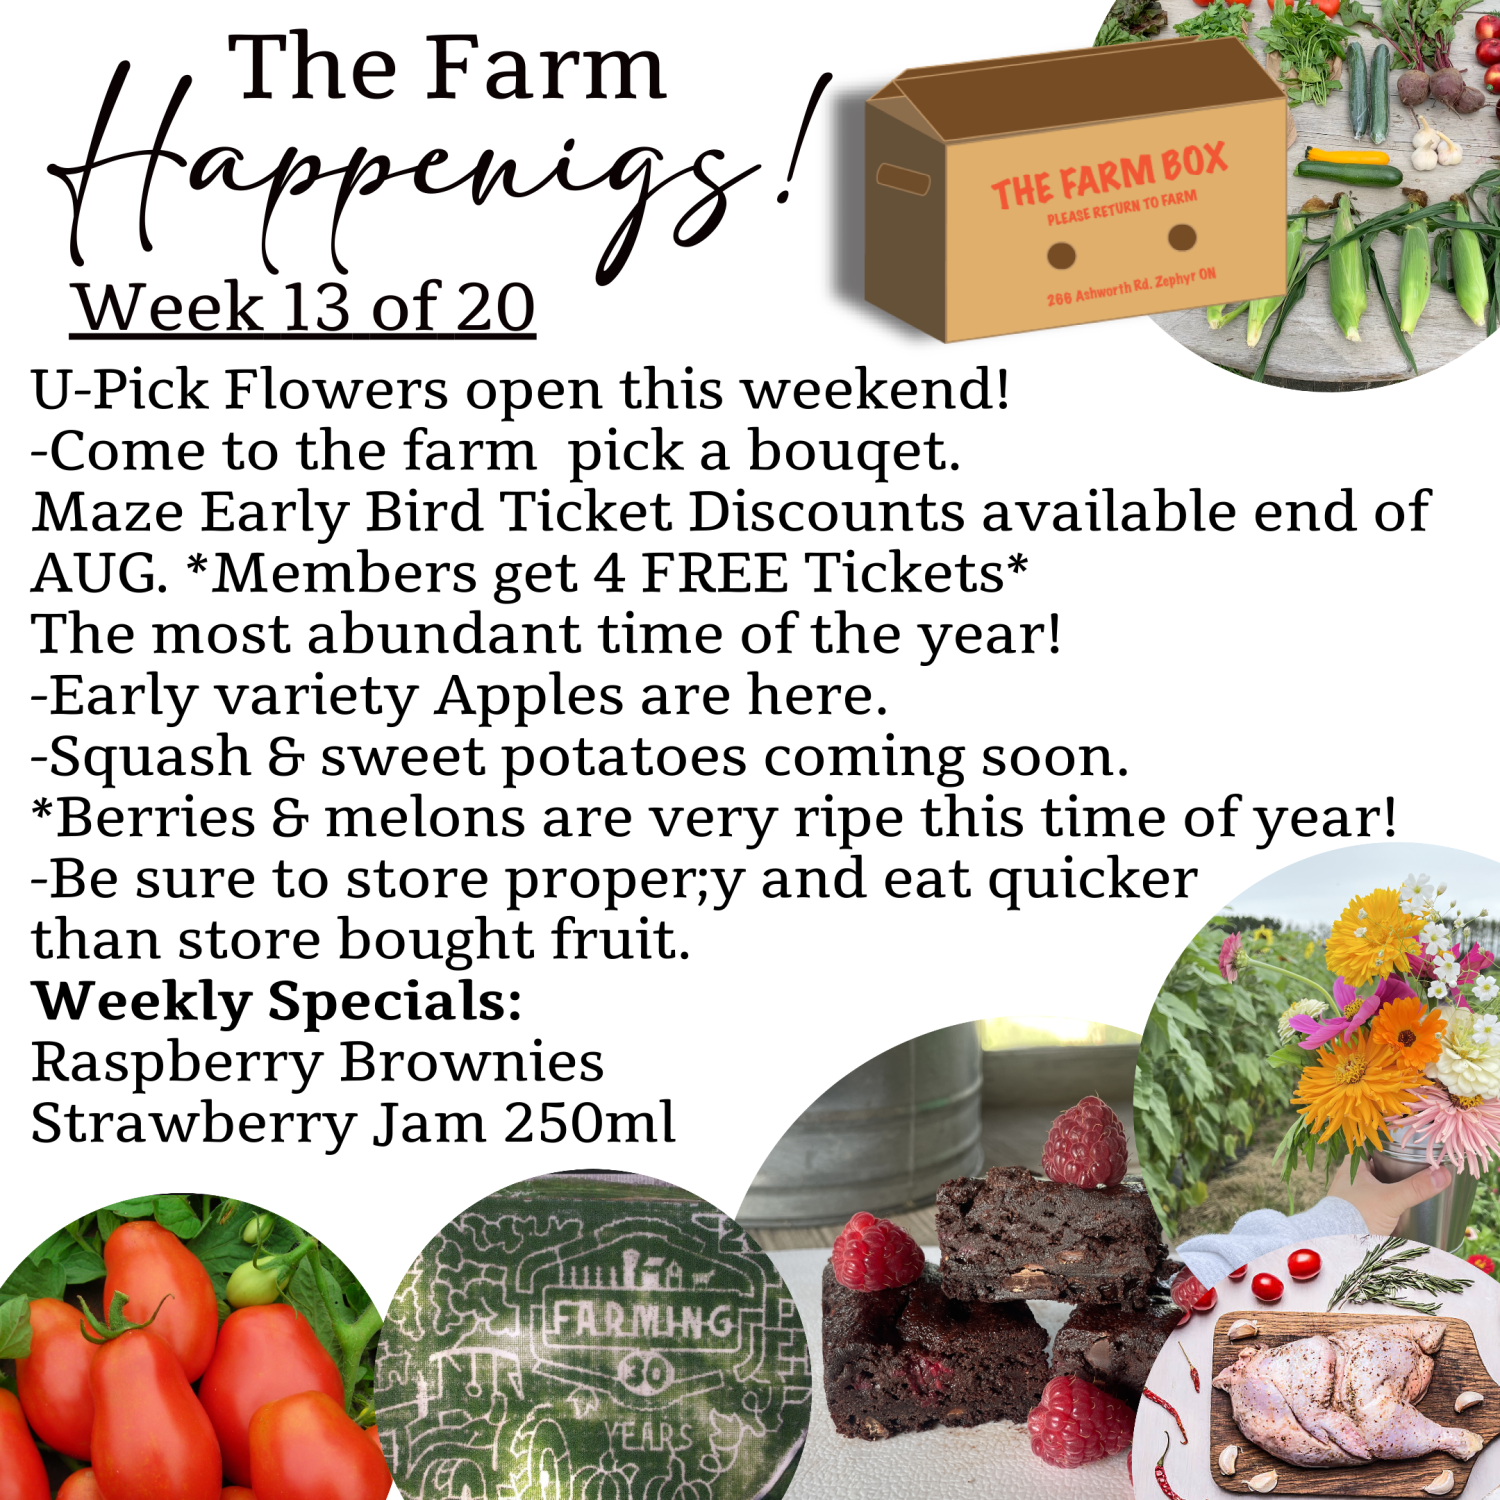 Previous Happening: "The Farm Box"-Coopers CSA Farm Farm Happenings Week 13